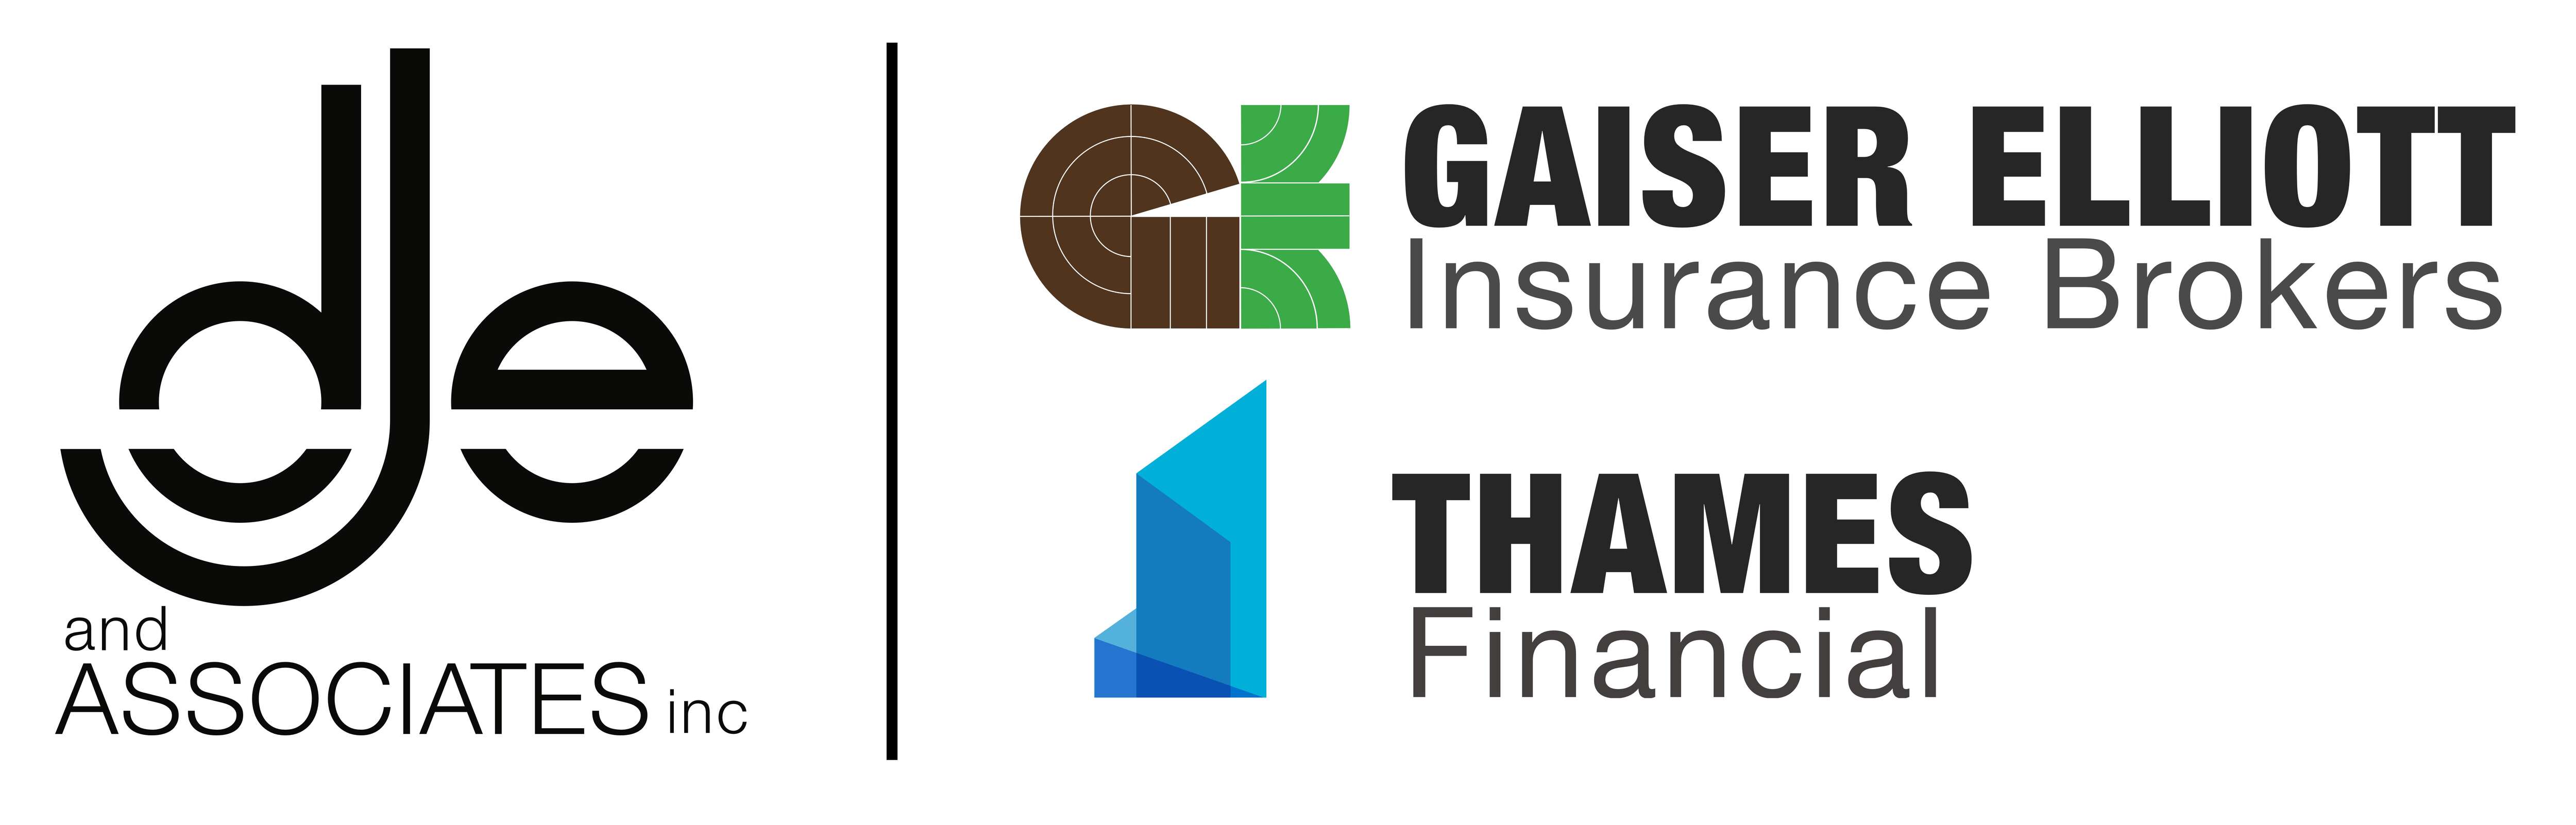 Gaiser Elliott Insurance Brokers